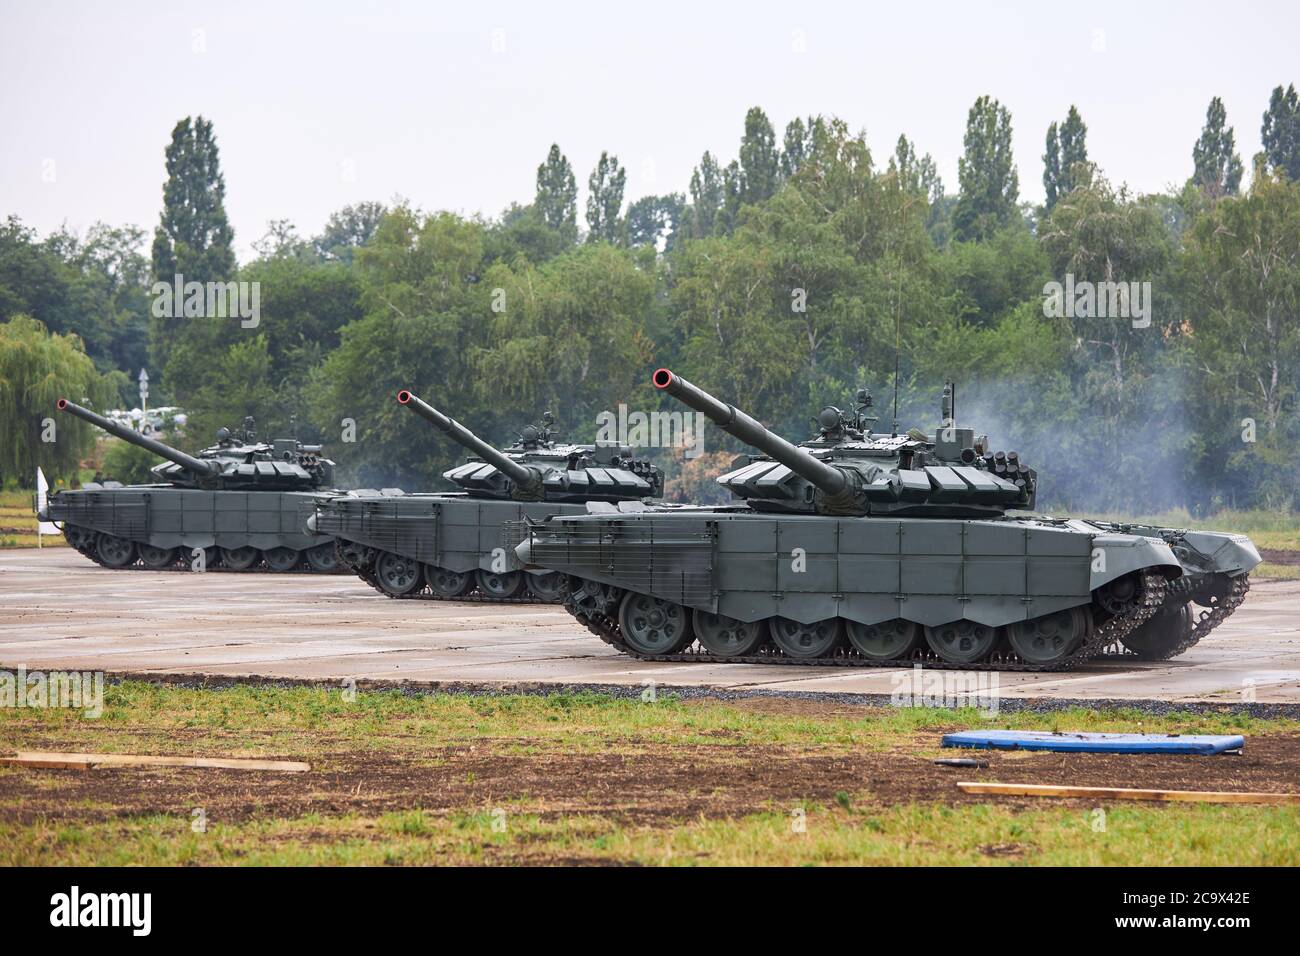 Sambek, Rostov region, Russia, June 28, 2019: International military technical forum ARMY-2019. Three T-90 tanks stand in a row Stock Photo